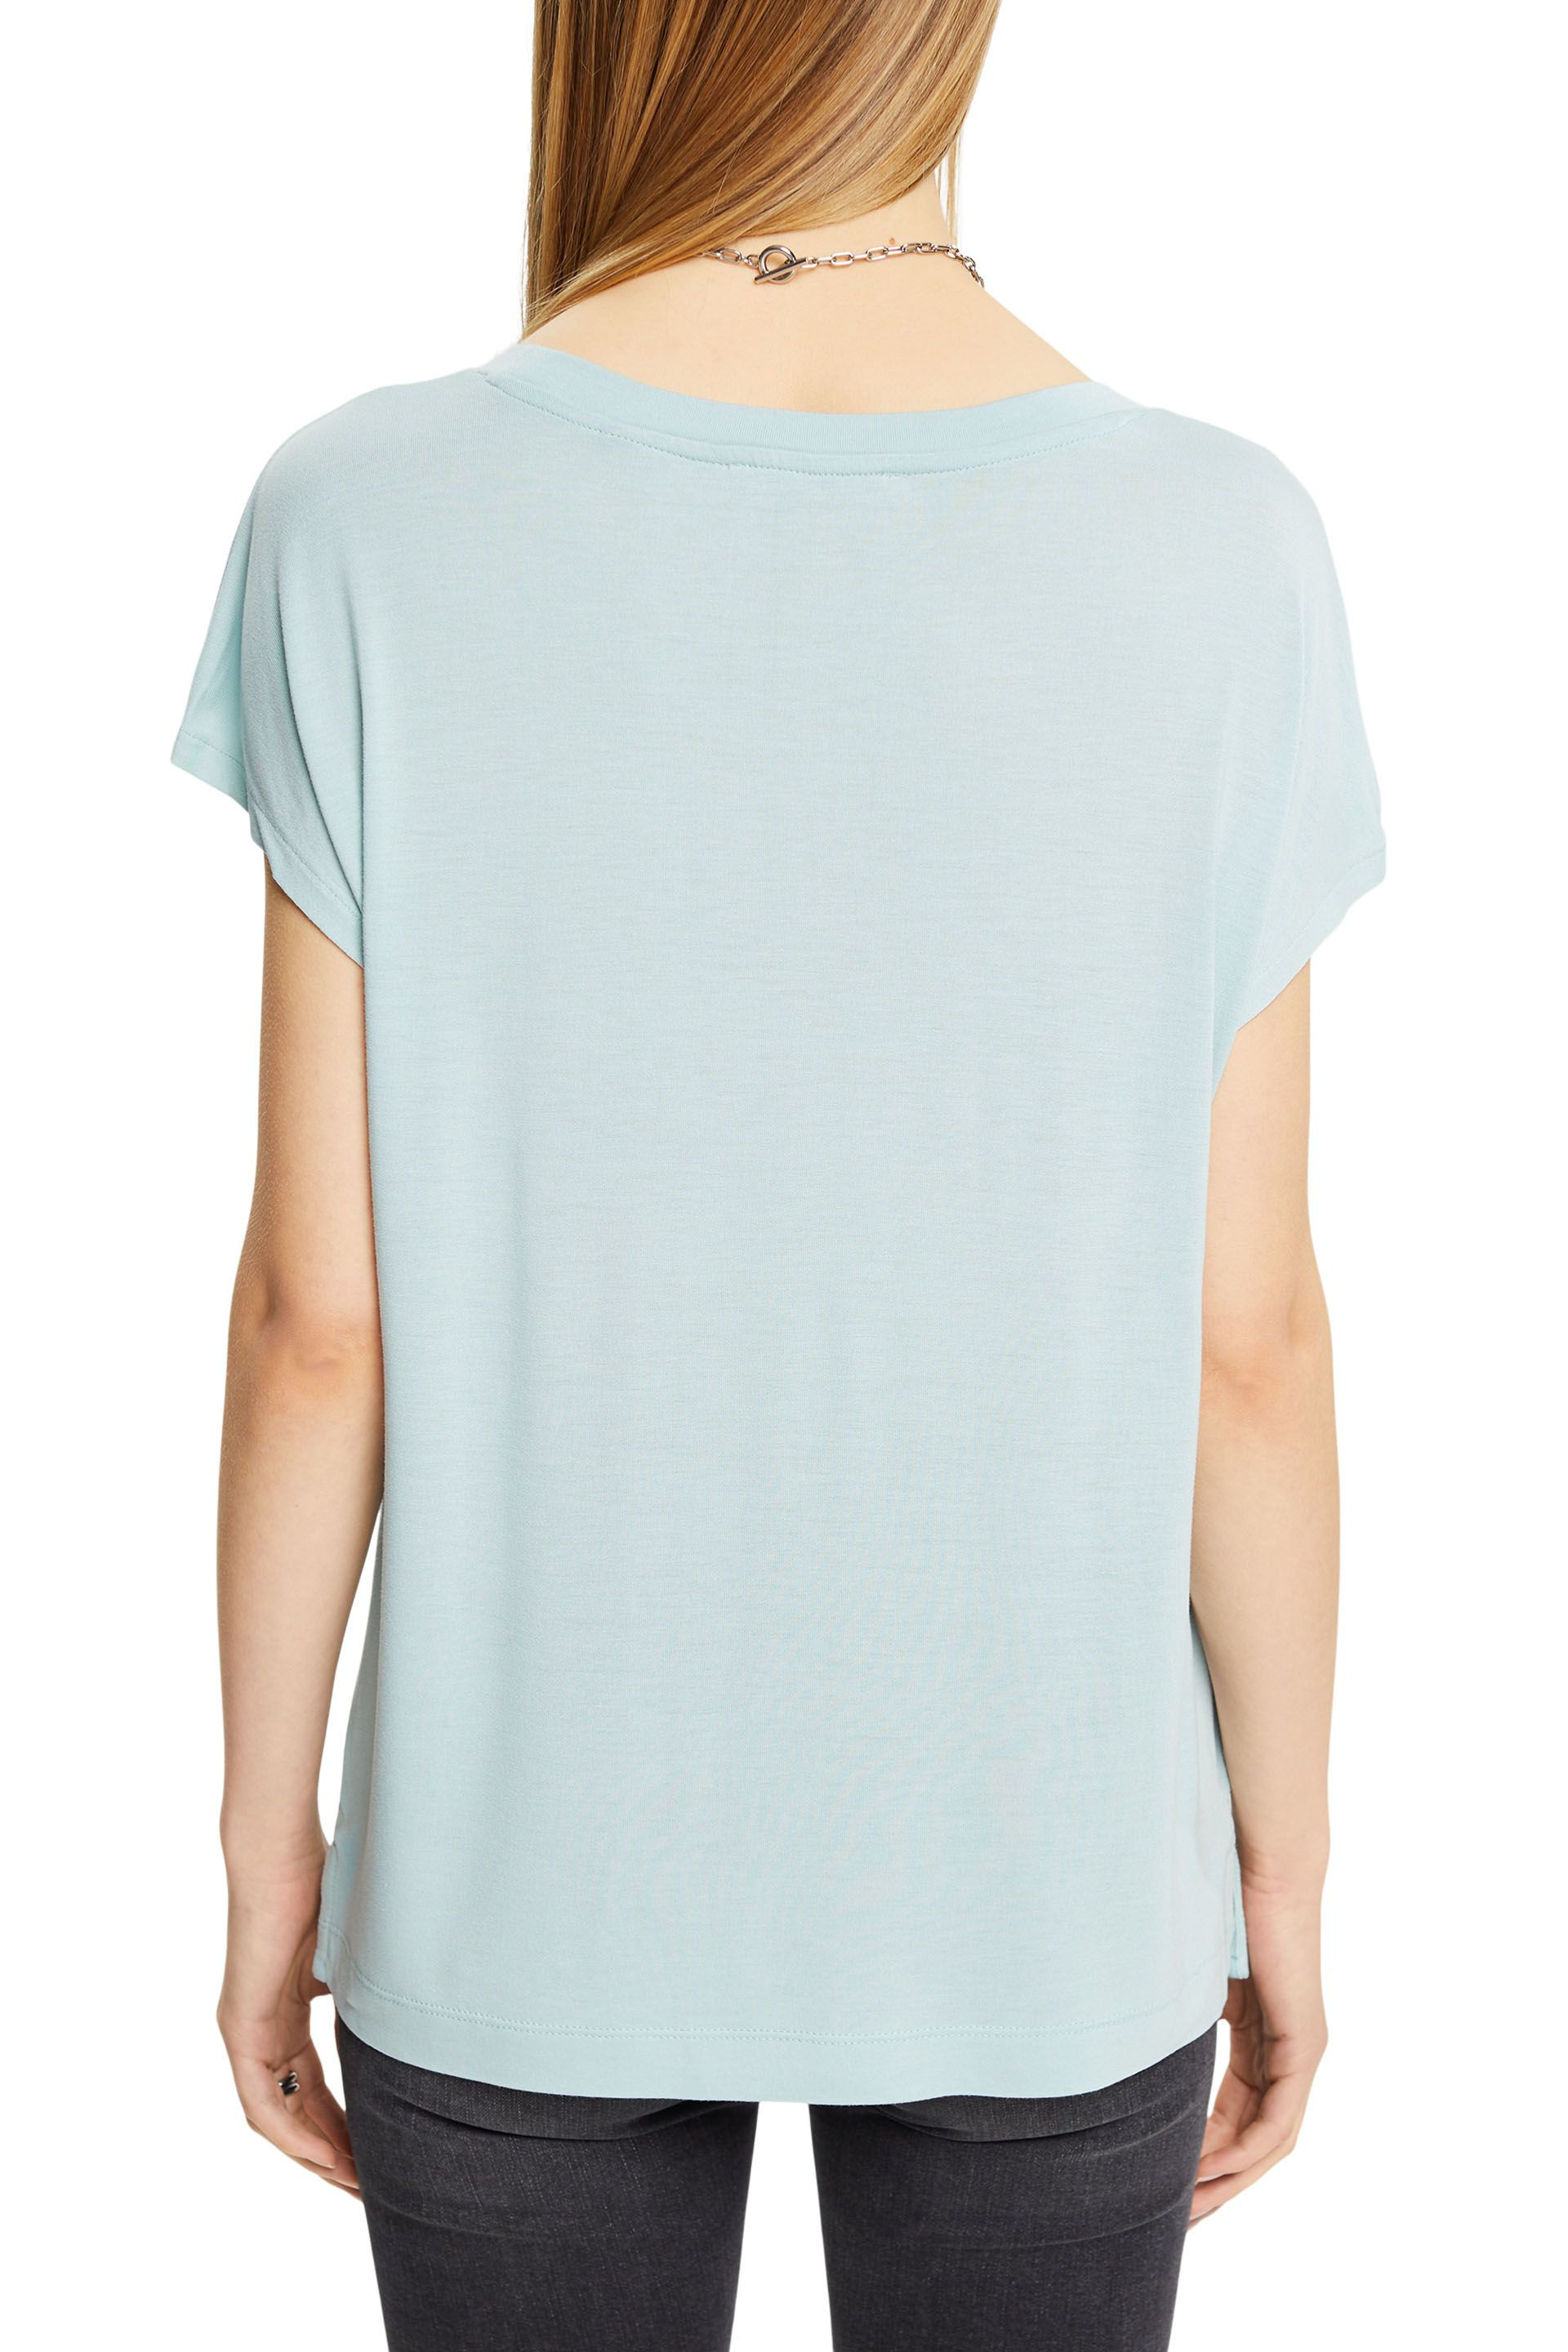 Esprit - T-shirt con scritta con paillettes, Azzurro, large image number 2